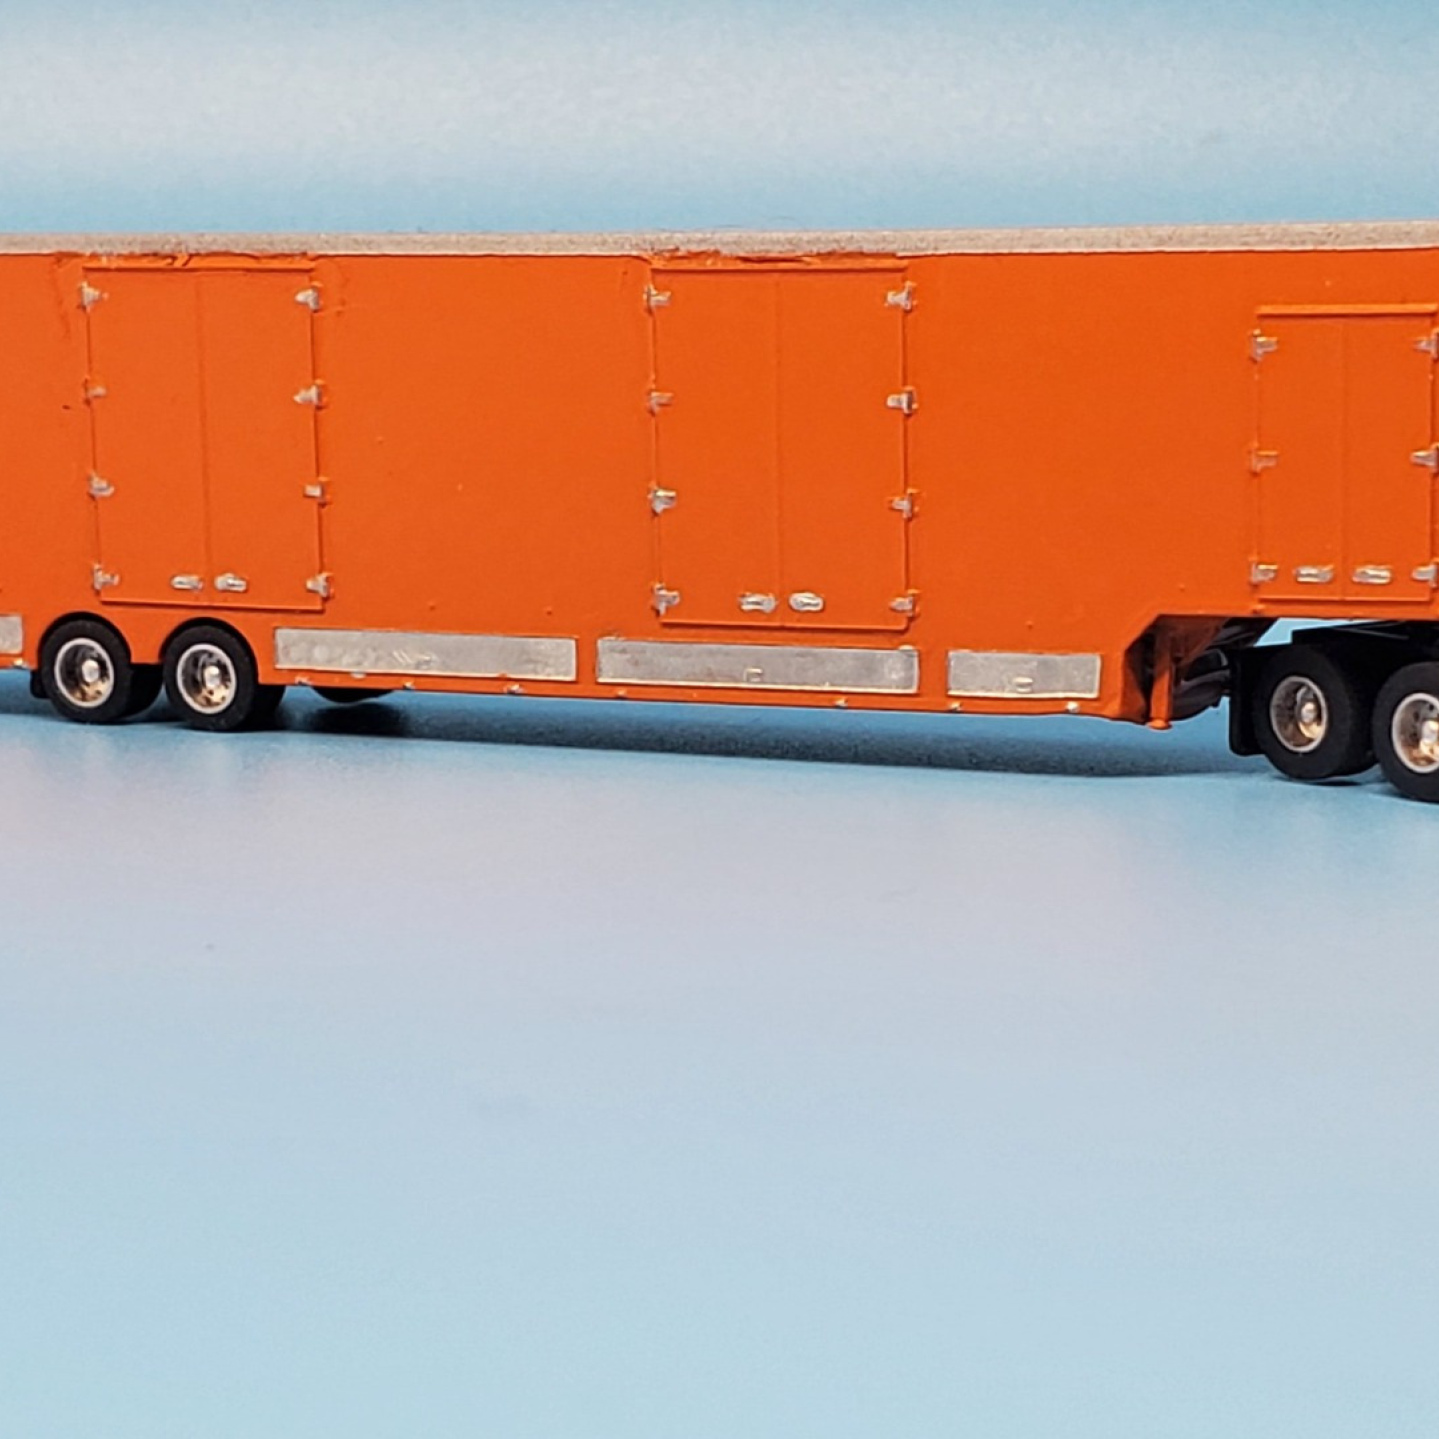 Modern 53ft moving/electronics van trailer 2 pack.